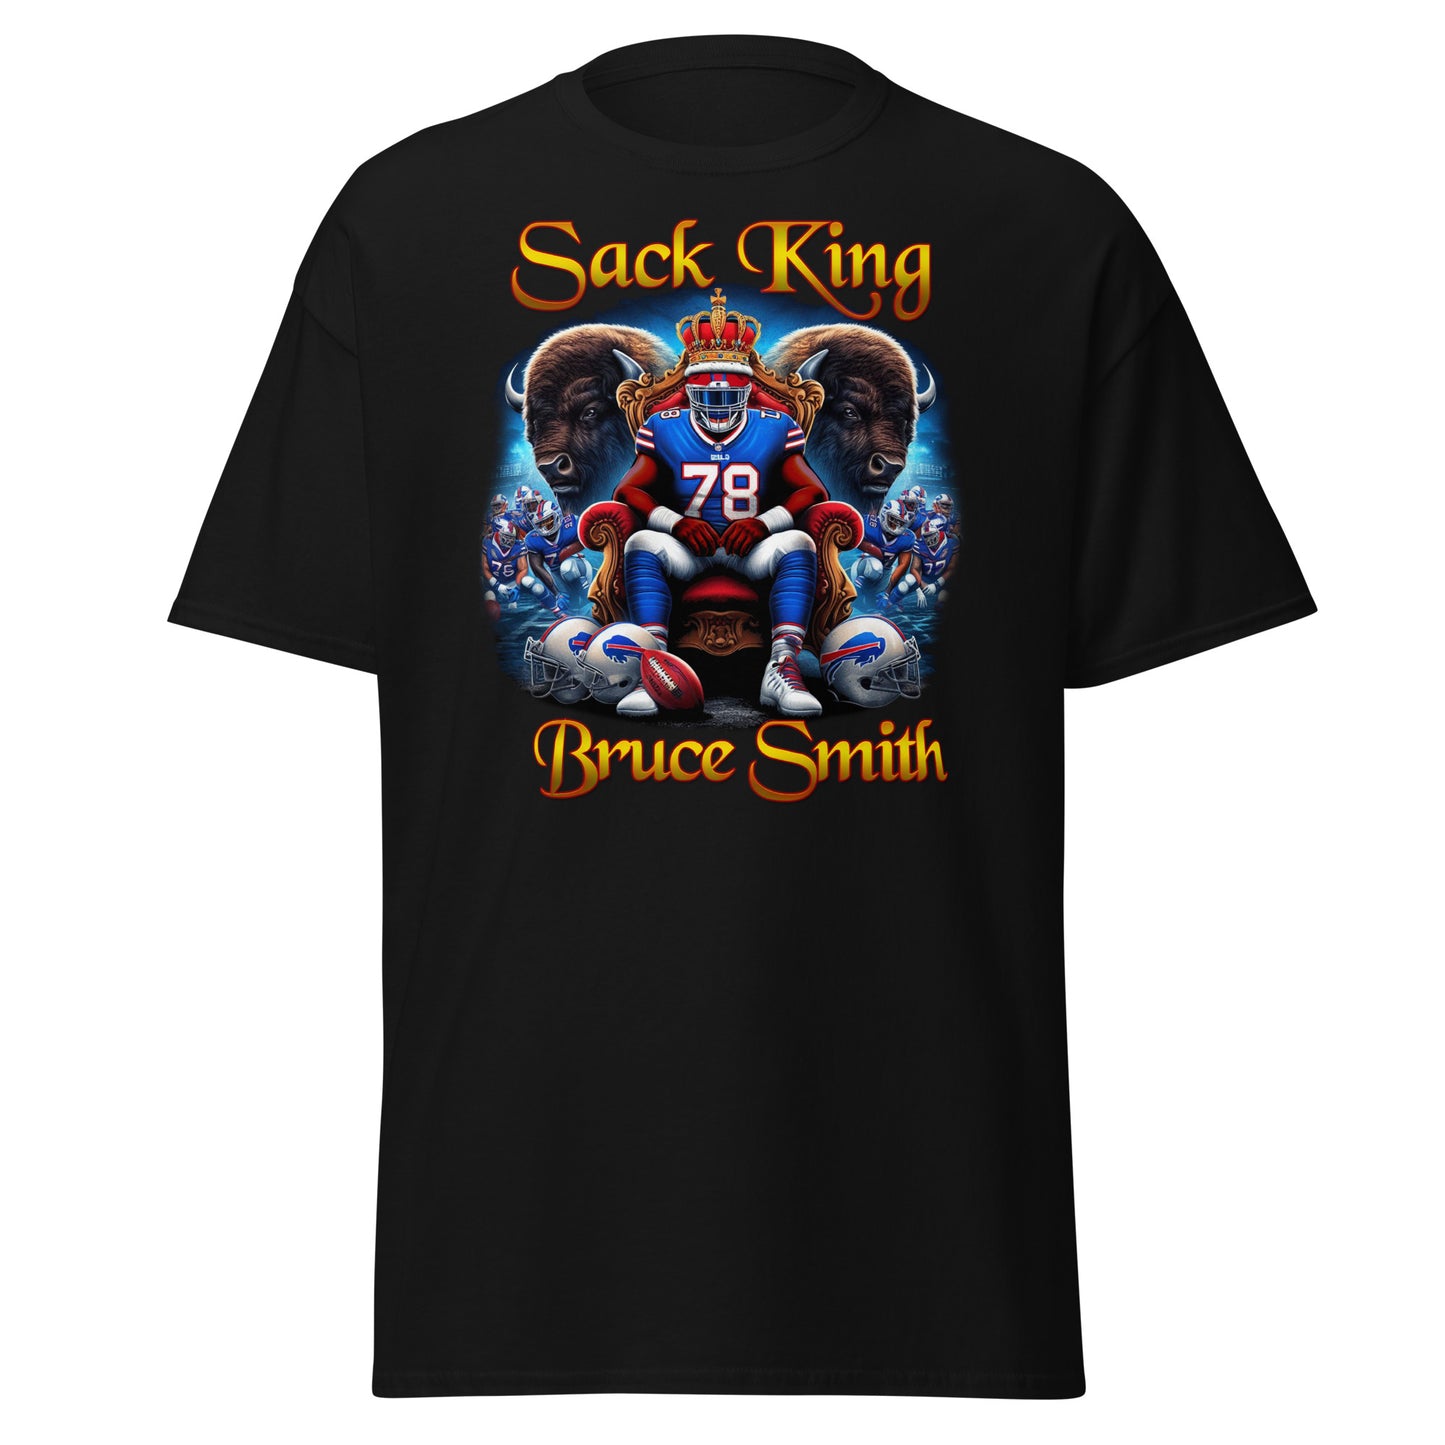 Sack King Bruce Smith T-Shirt - Celebrating Defensive Dominance